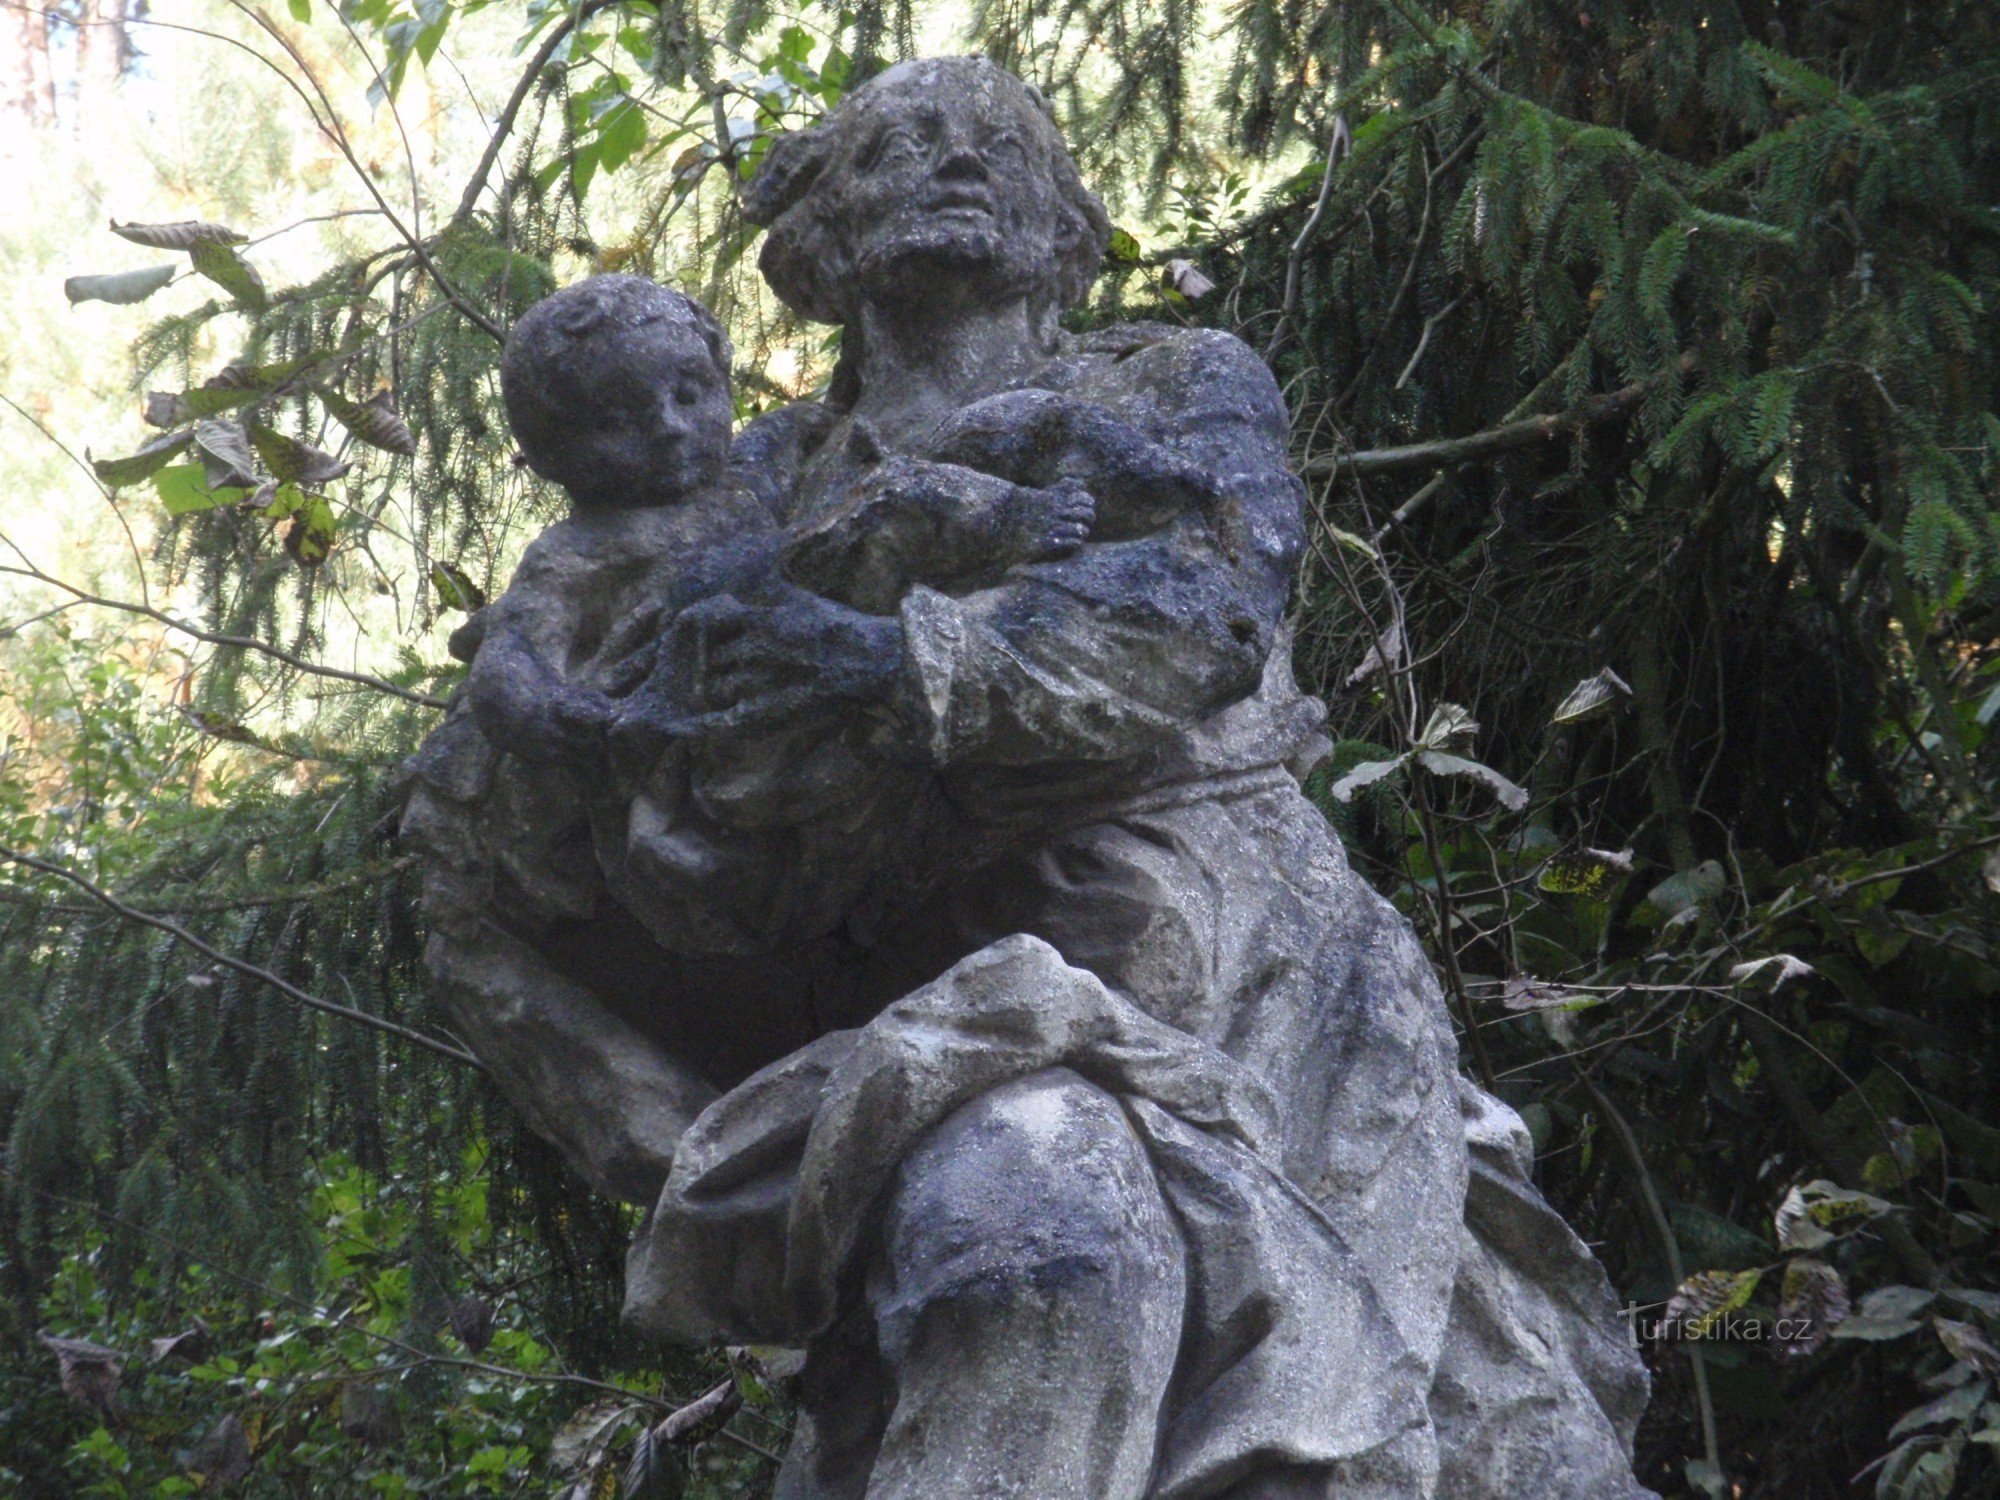 Statue of St. Joseph with Baby Jesus near Tasov